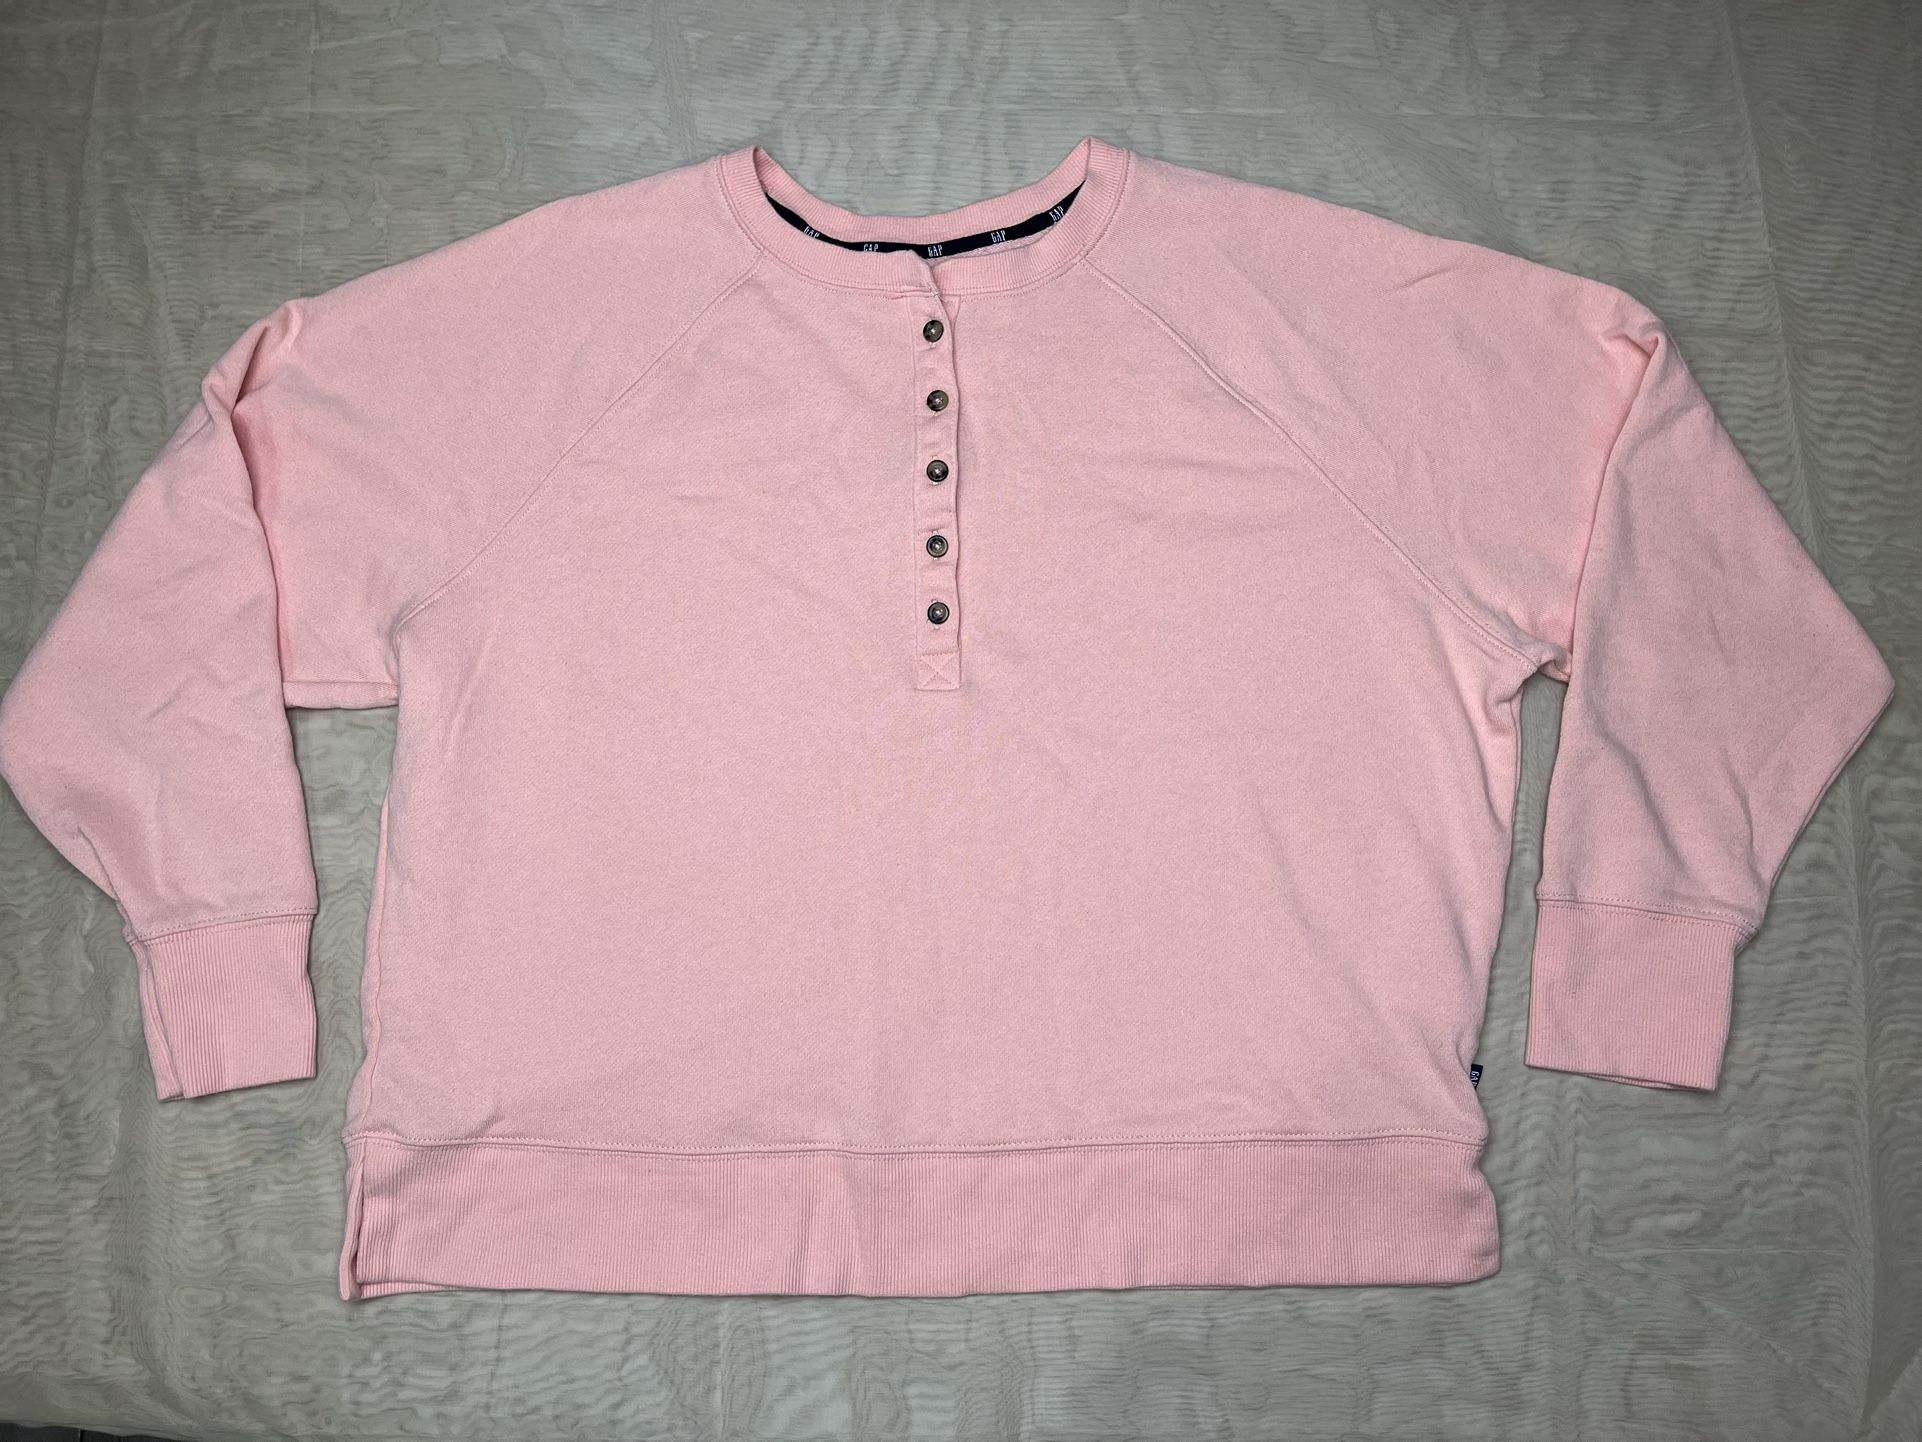 Gap peach pink long sleeves sweatshirt size XL women’s